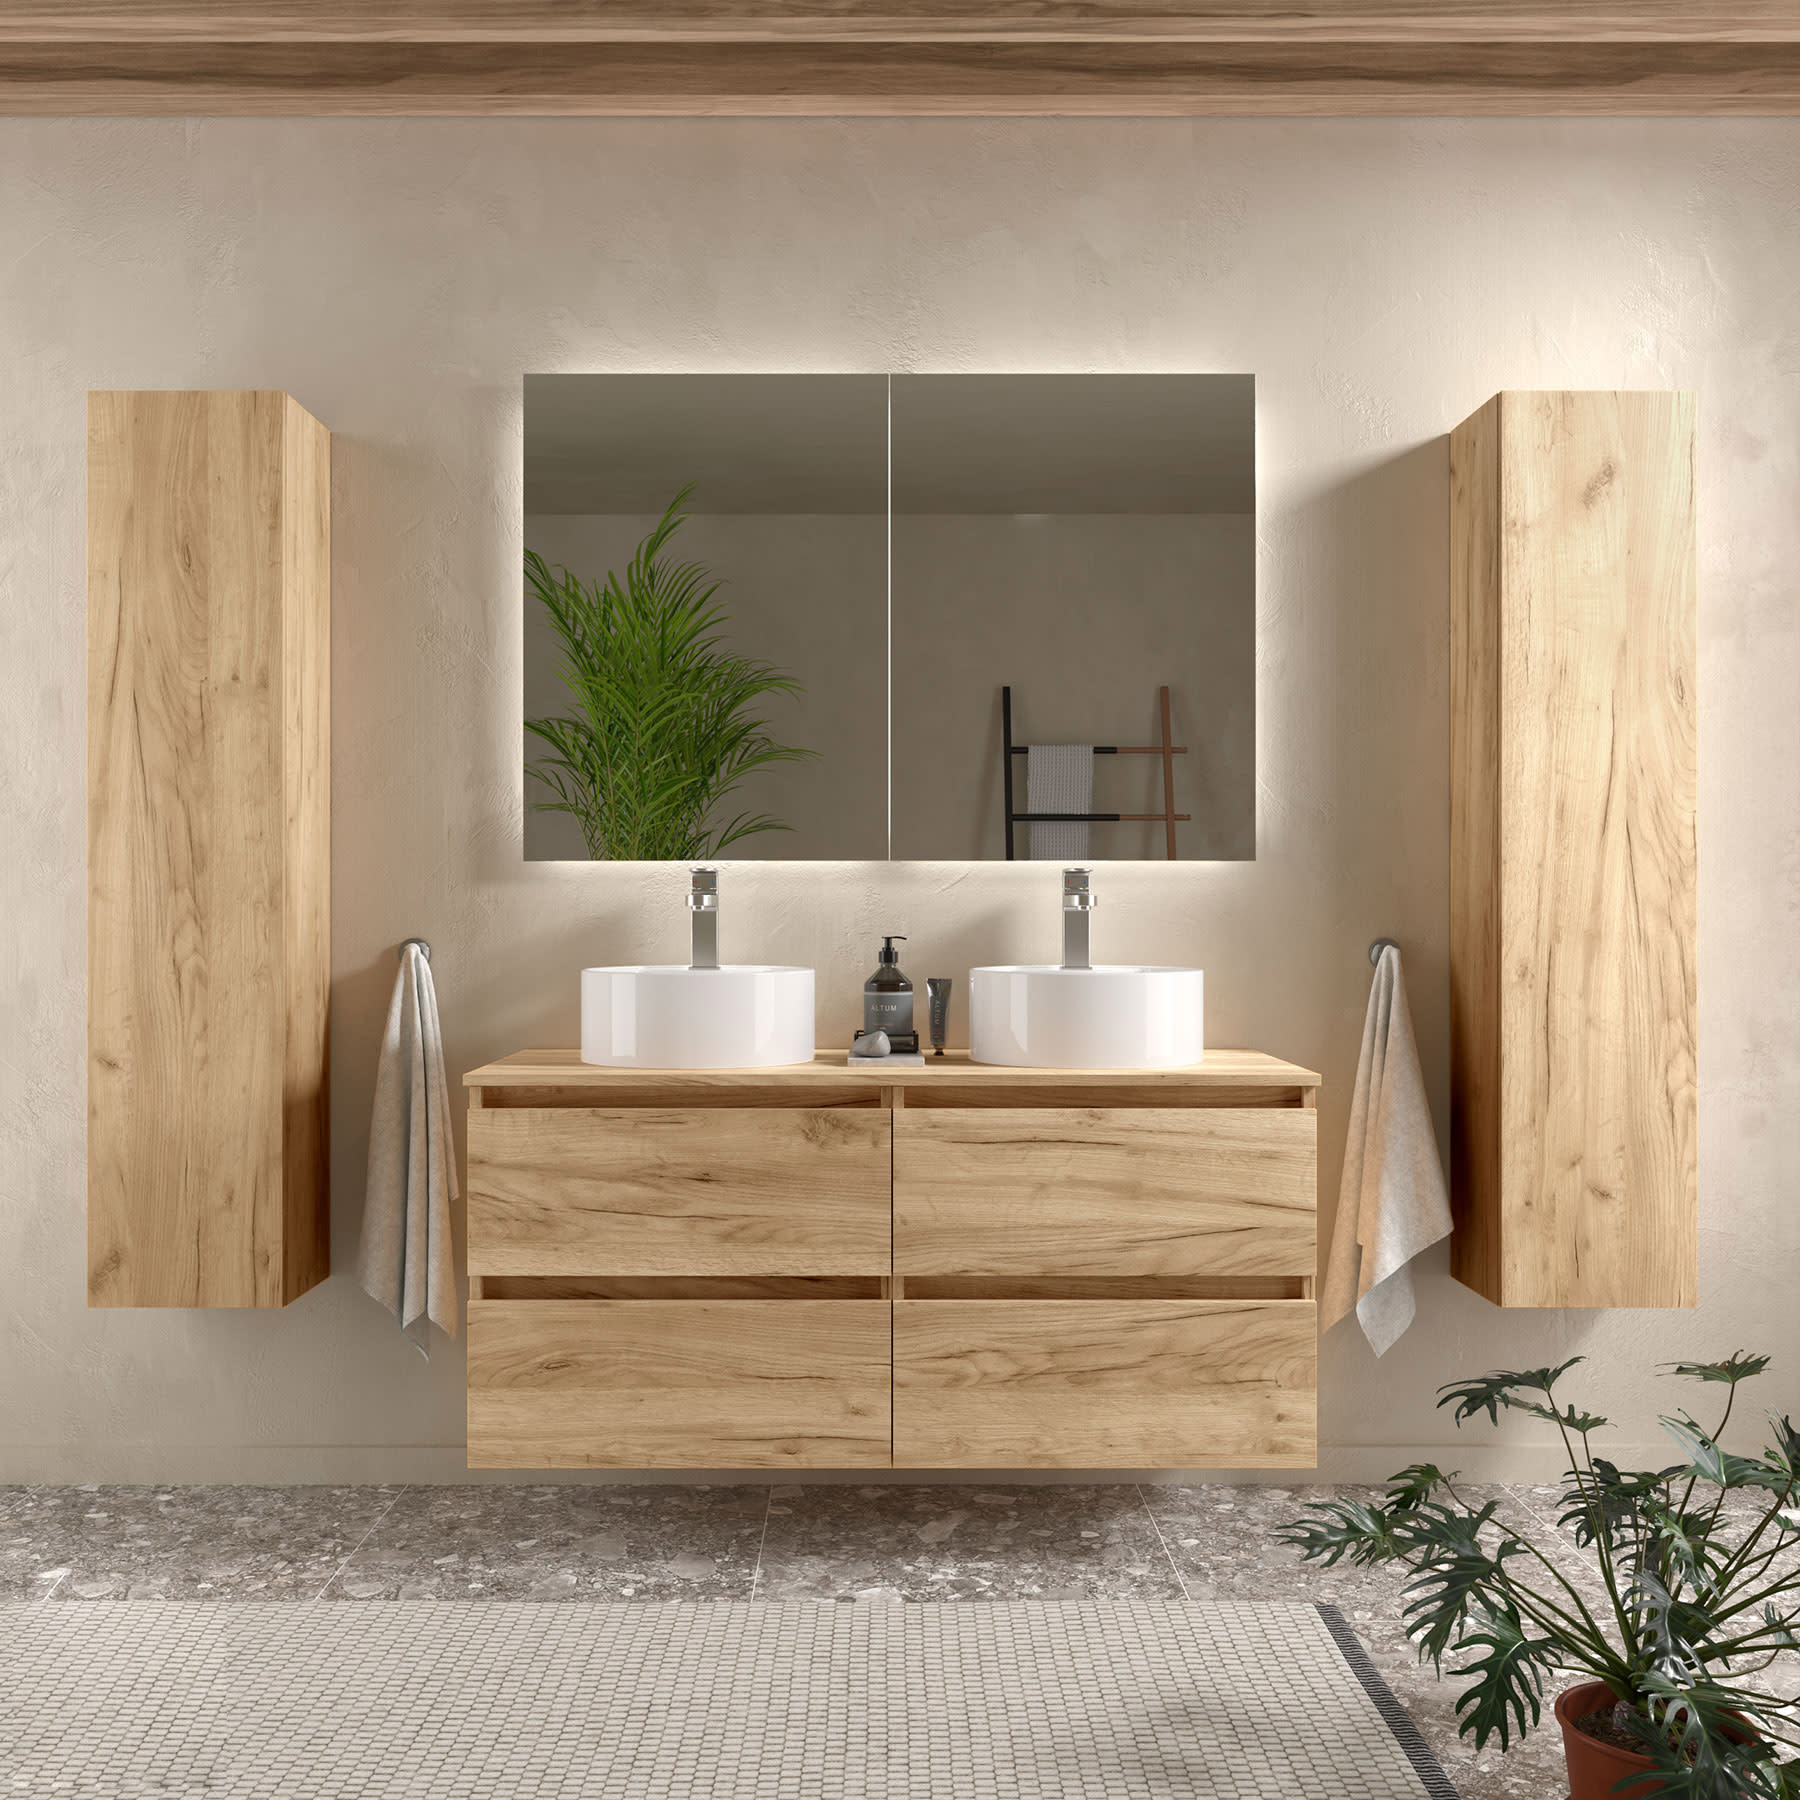 Mueble baño 120 cm - 4 cajones y lavabo doble seno AZO ¡Envíos gratis!